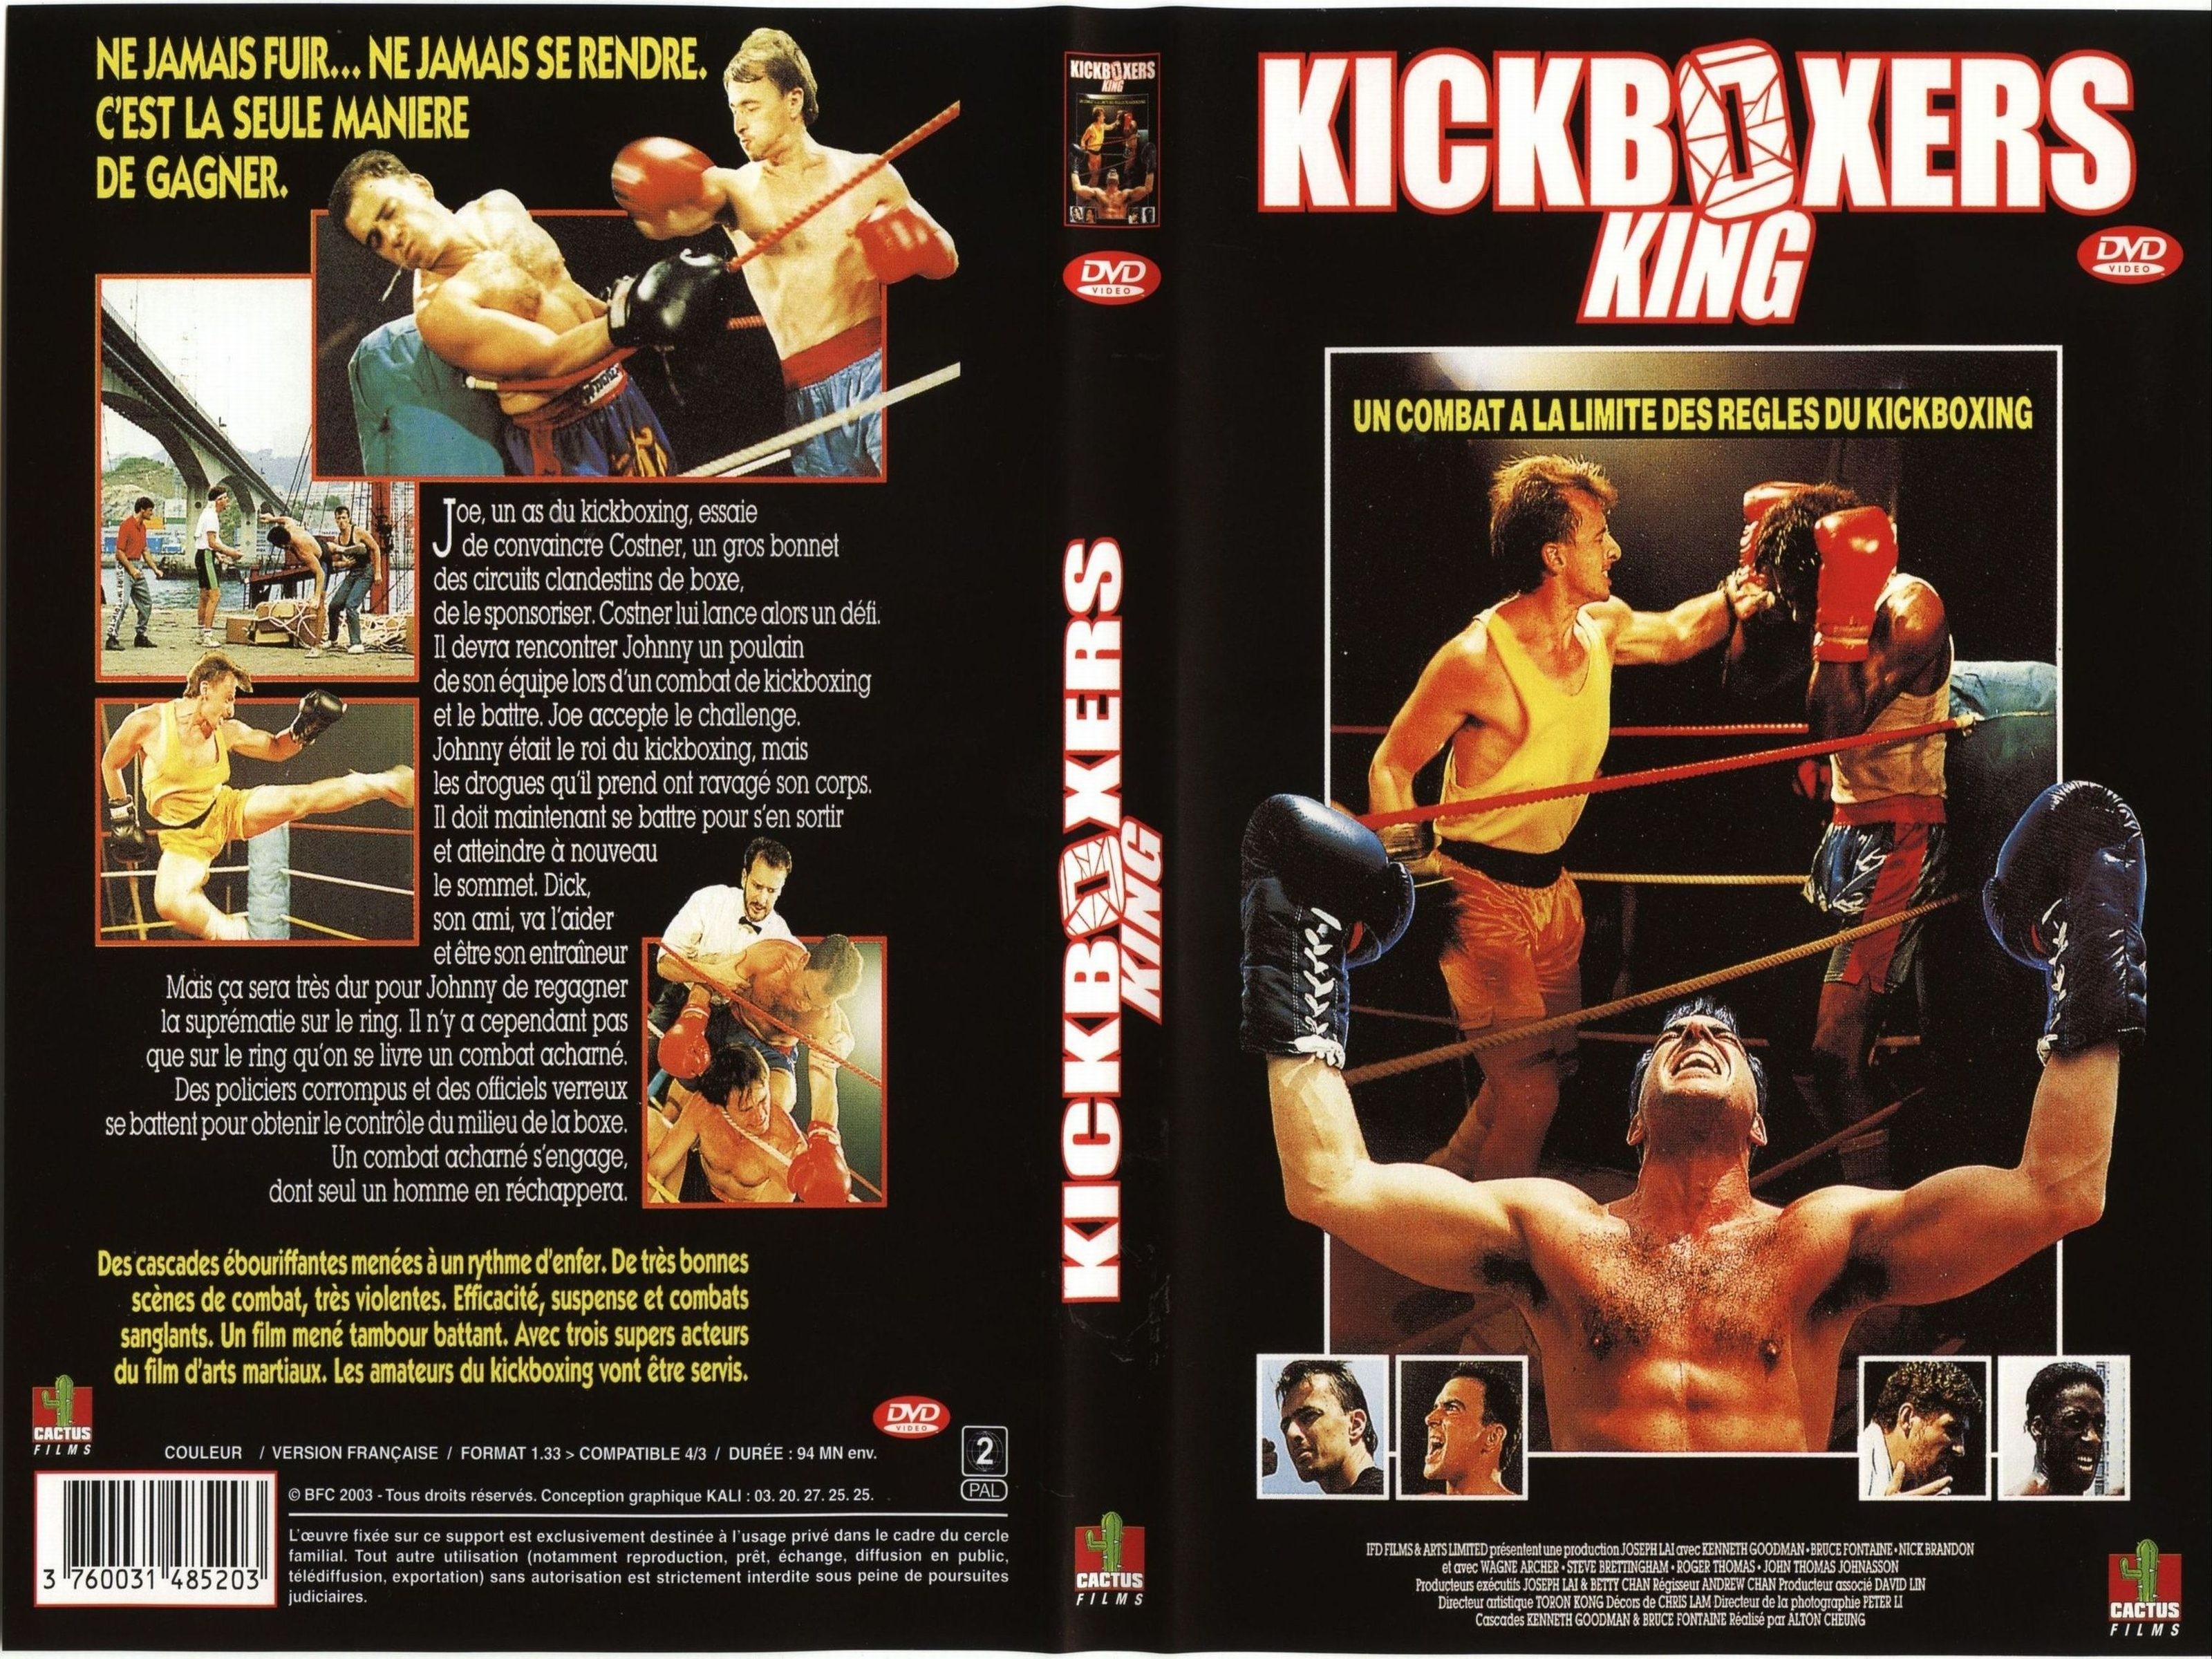 Jaquette DVD Kickboxer king